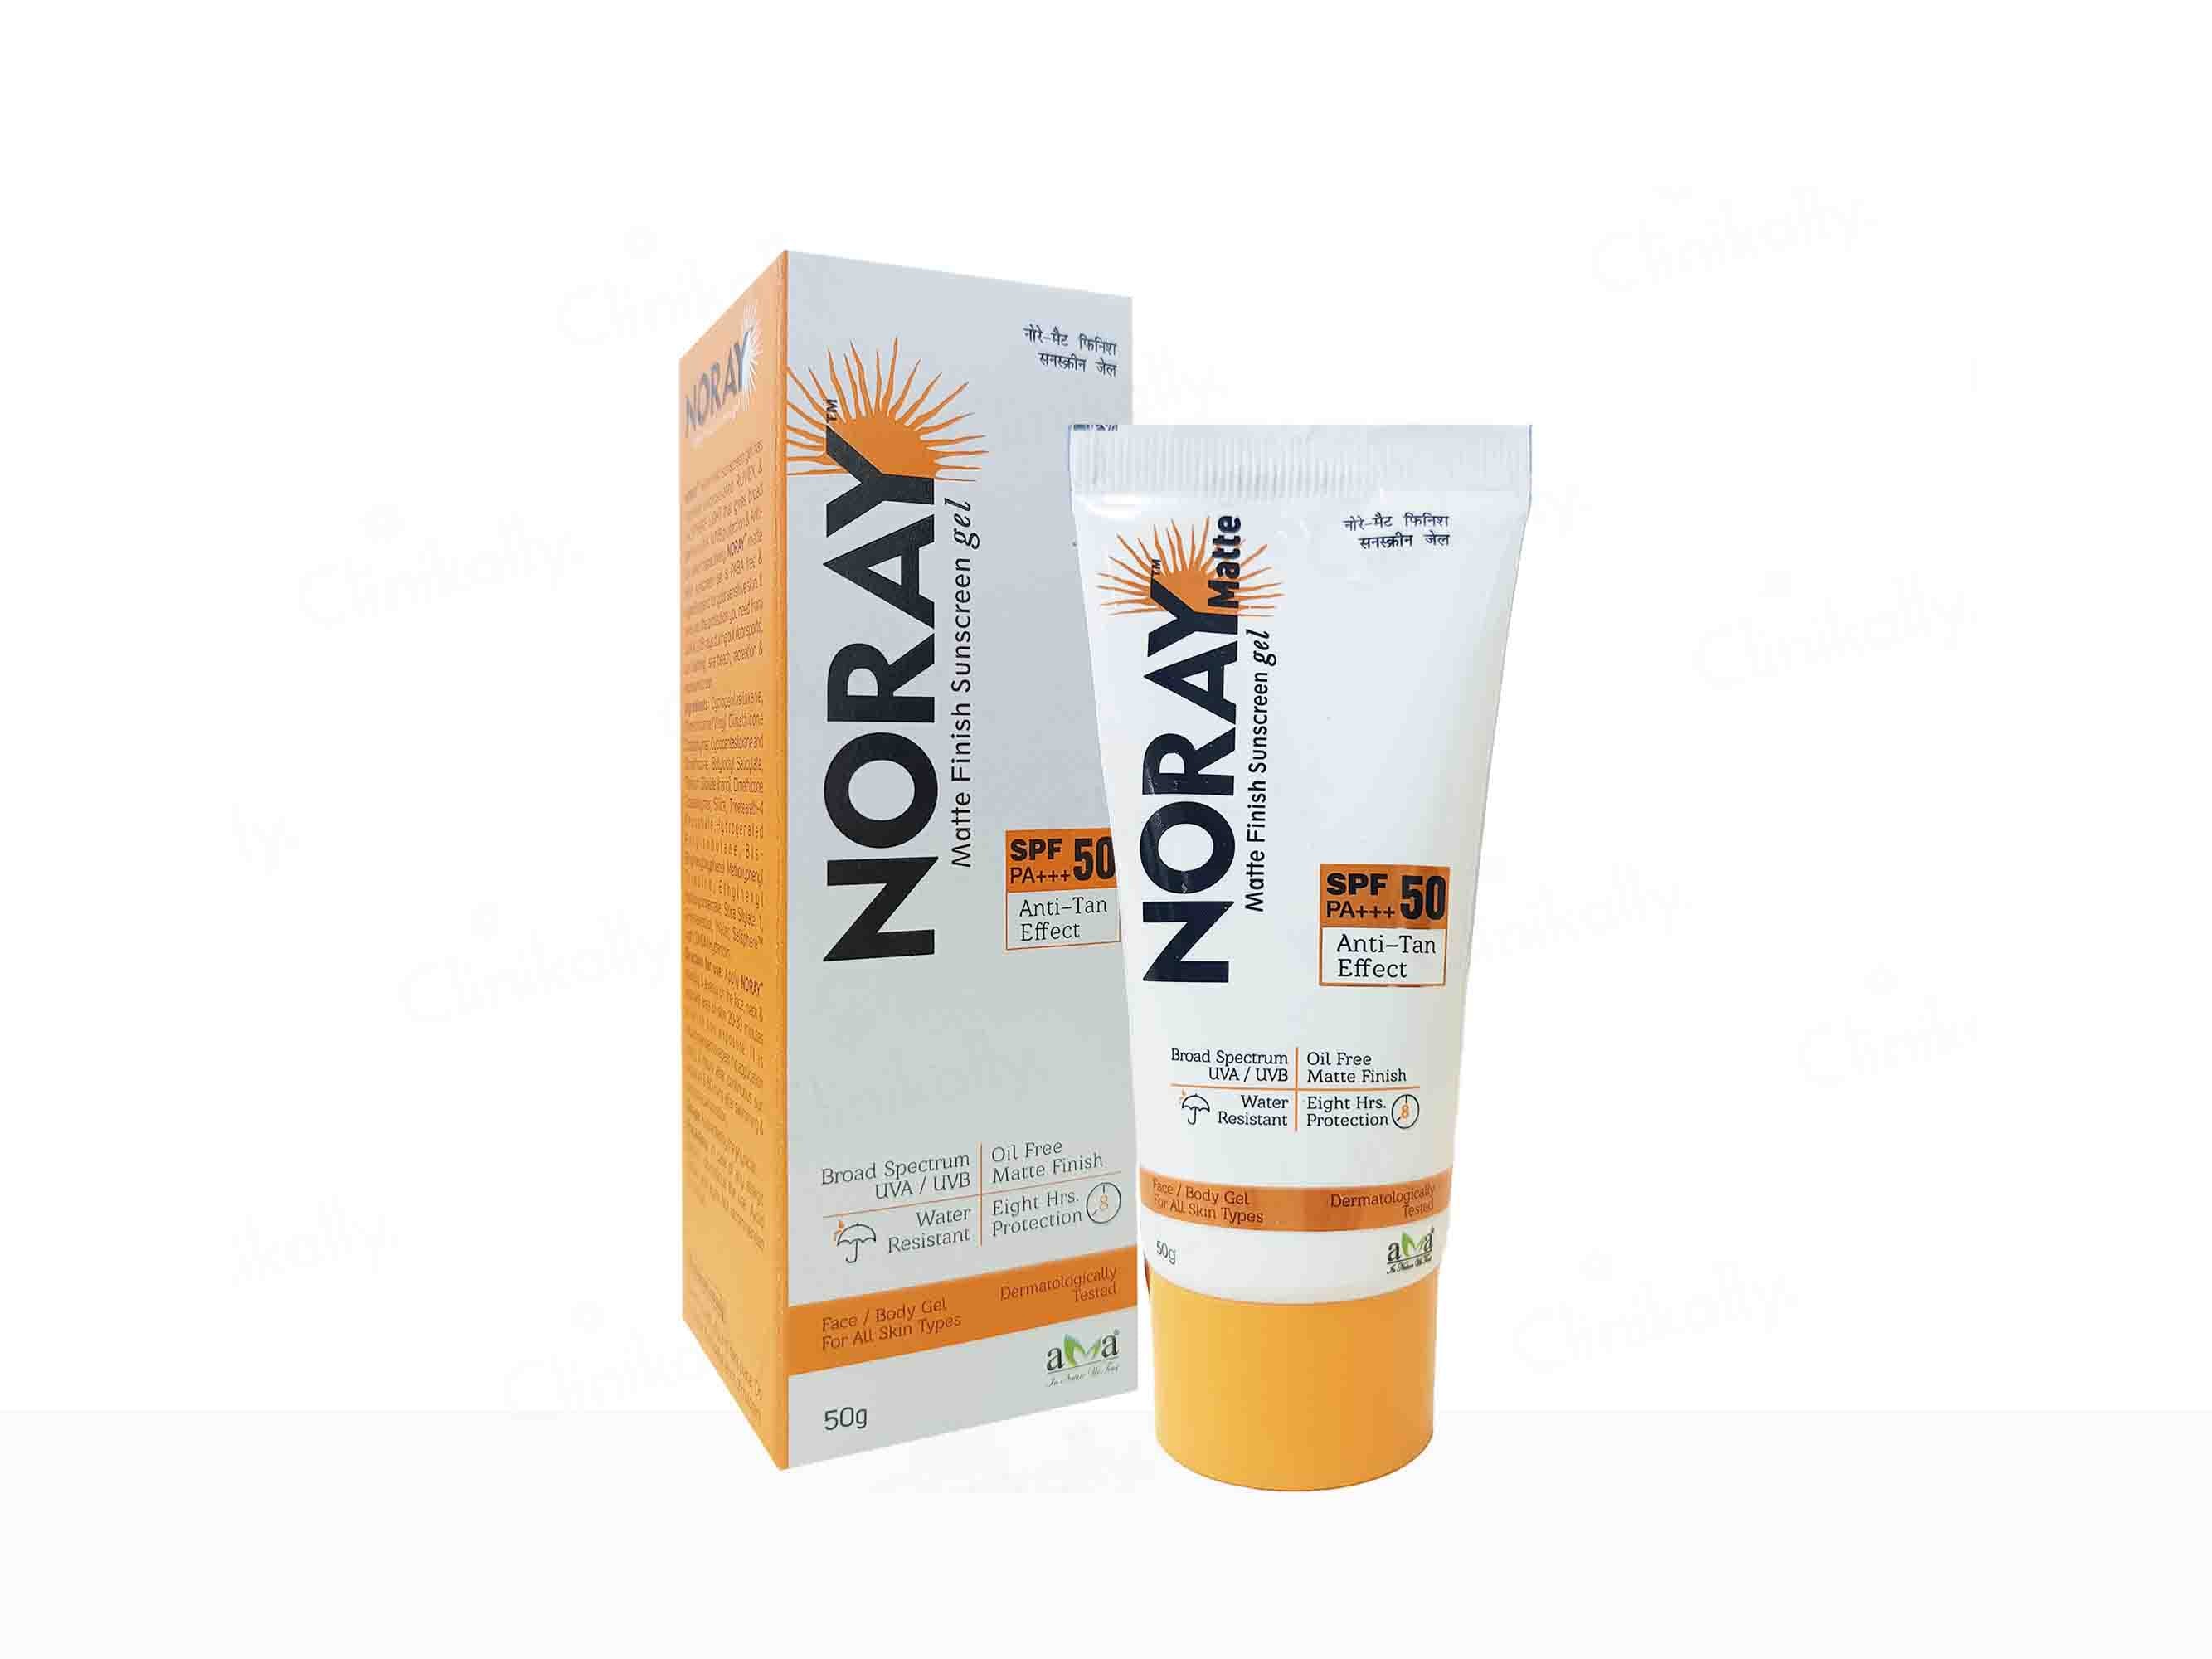 Vegetal Noray Matte Finish Sunscreen Gel SPF 50 PA+++